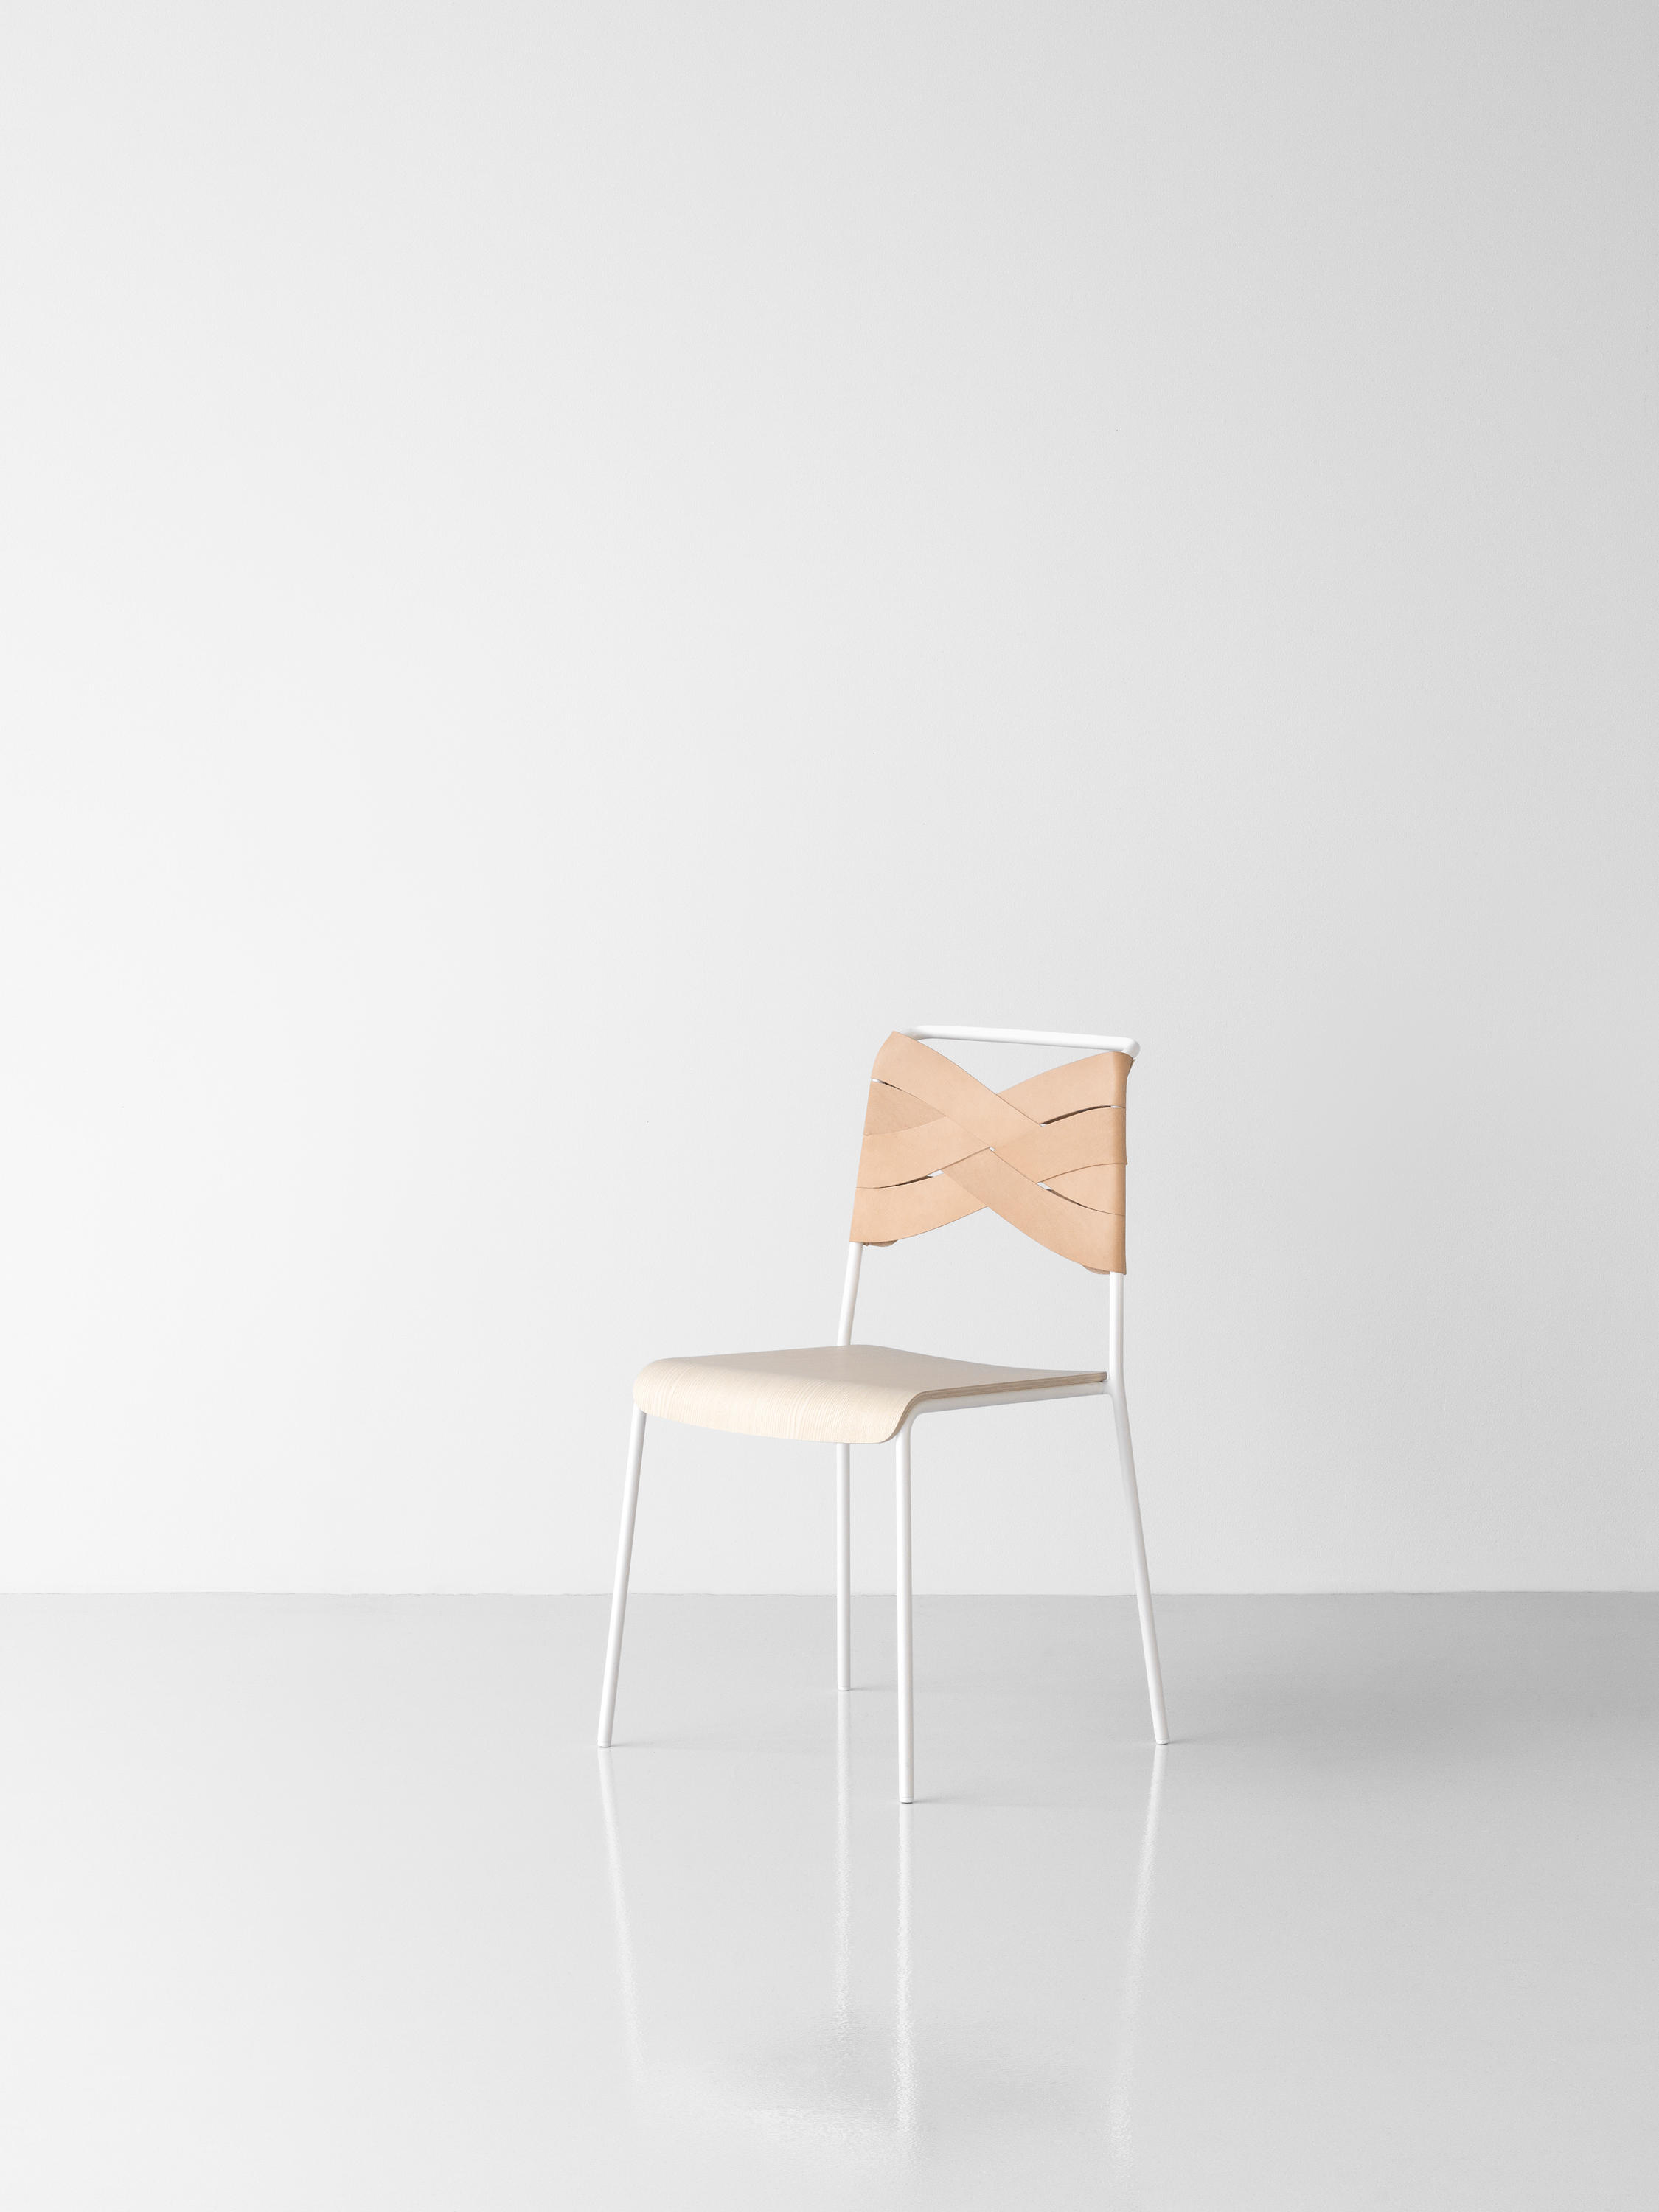 Torso Chair by Lisa Hilland for Design House Stockholm